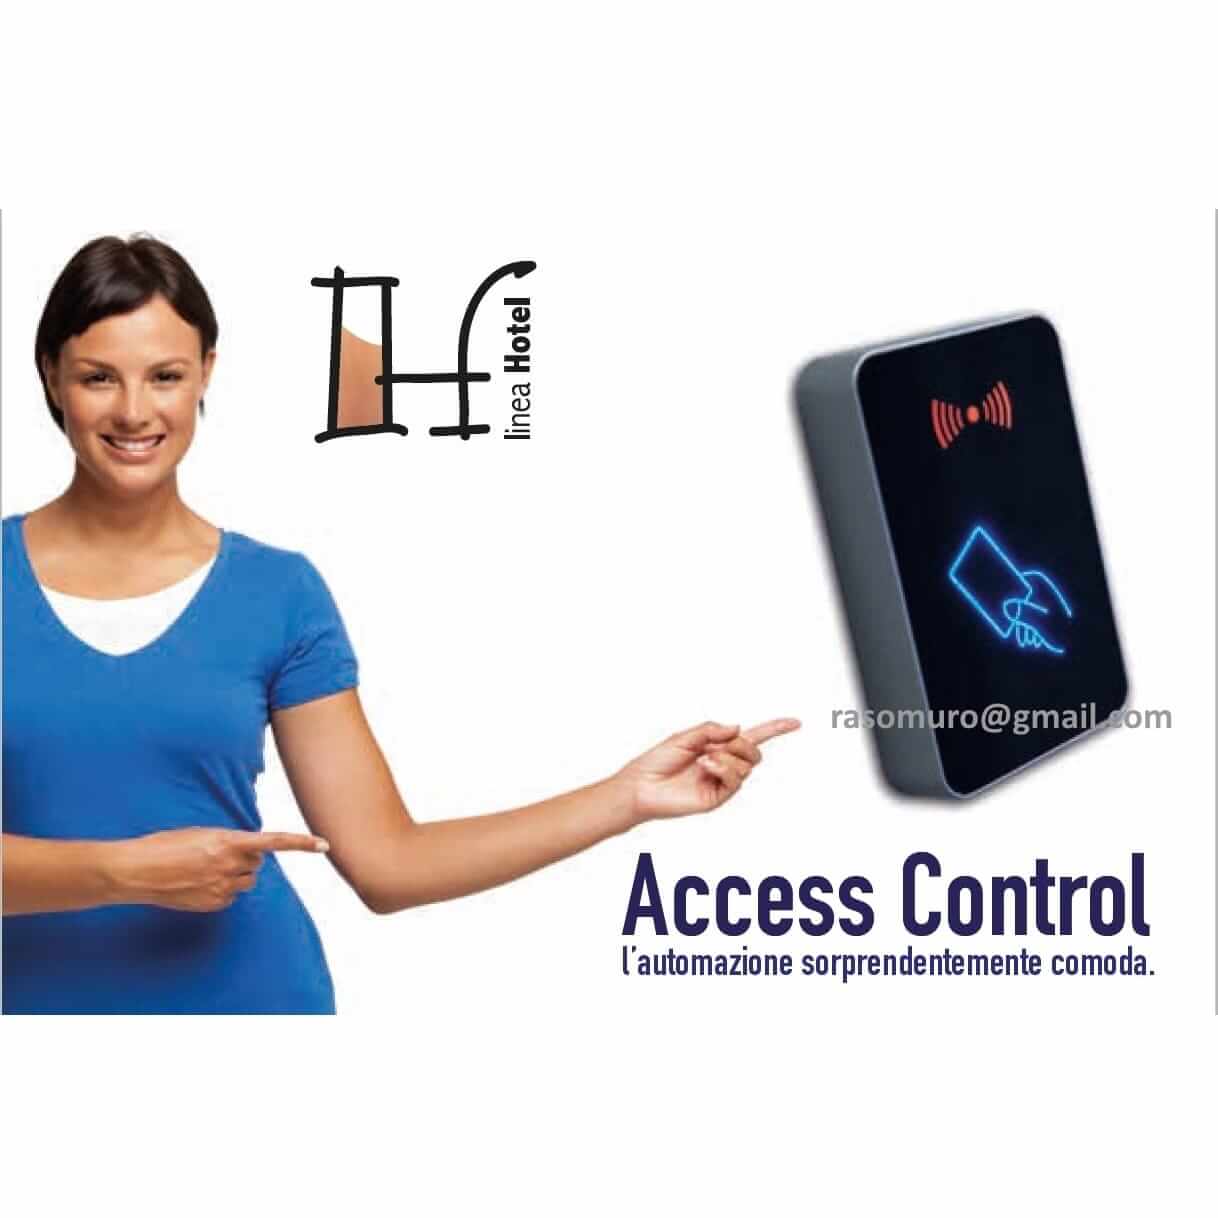 Control access